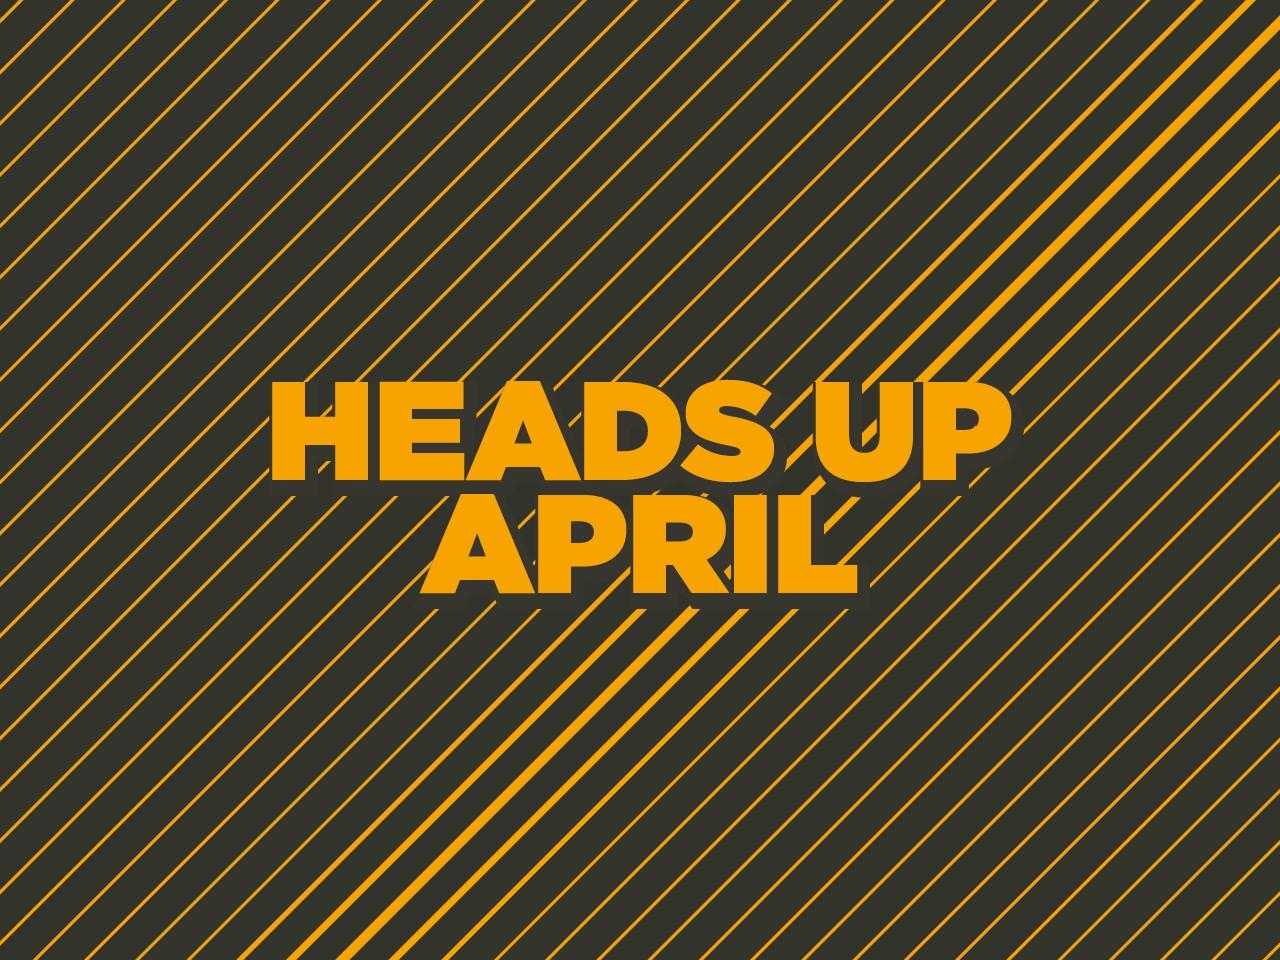 Heads up april